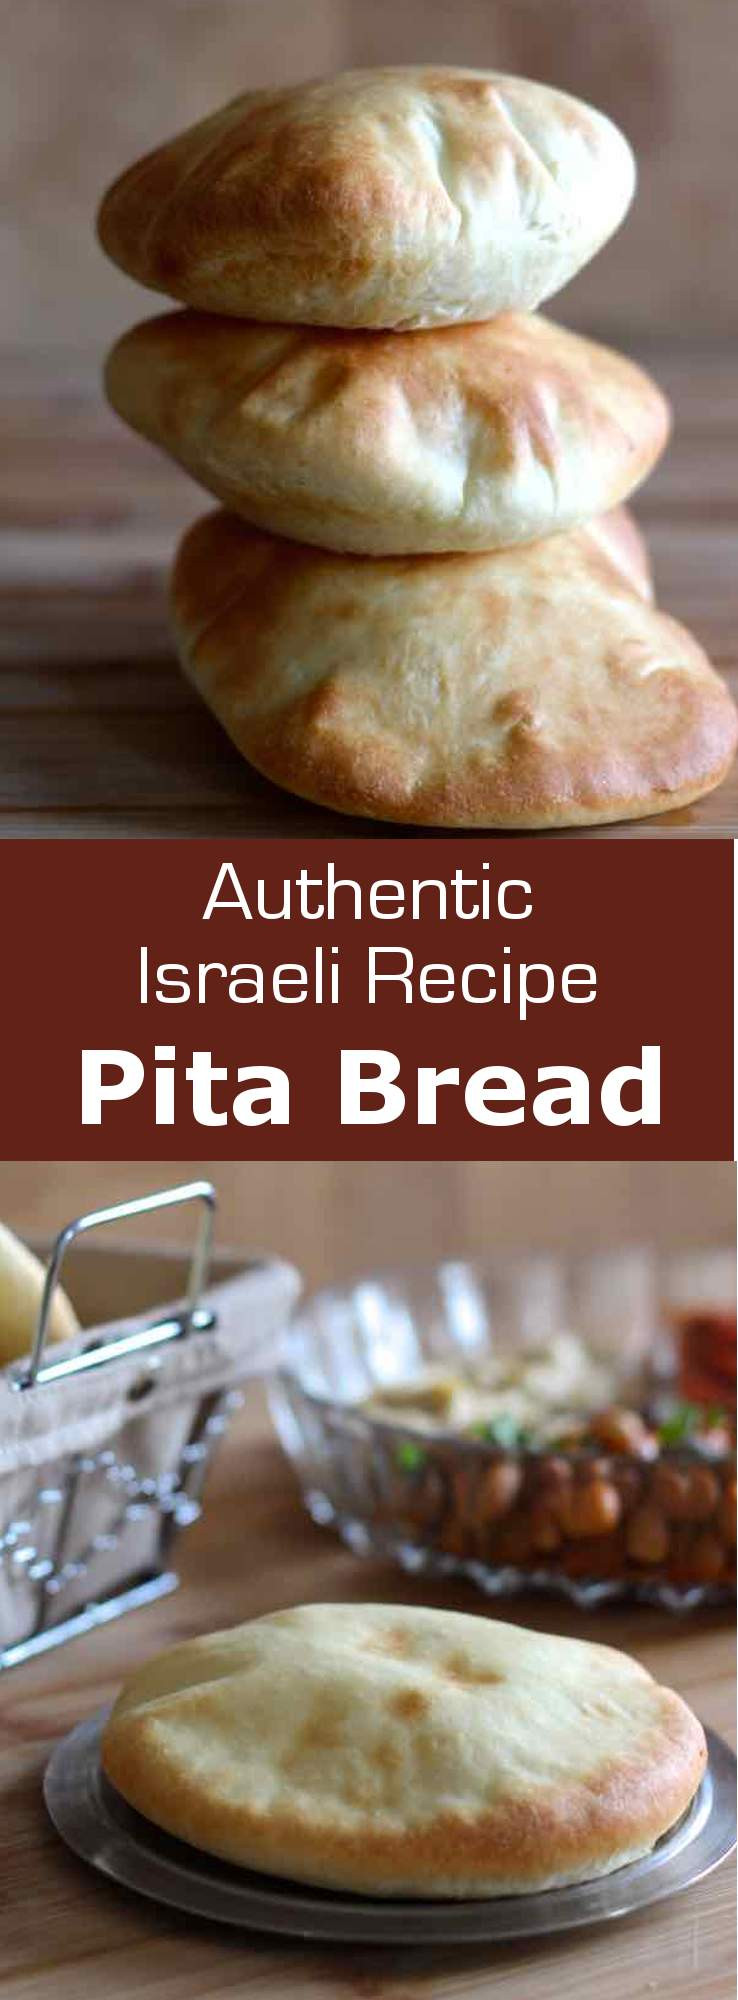 Low Carb Pita Bread Recipe
 pita bread bakery near me